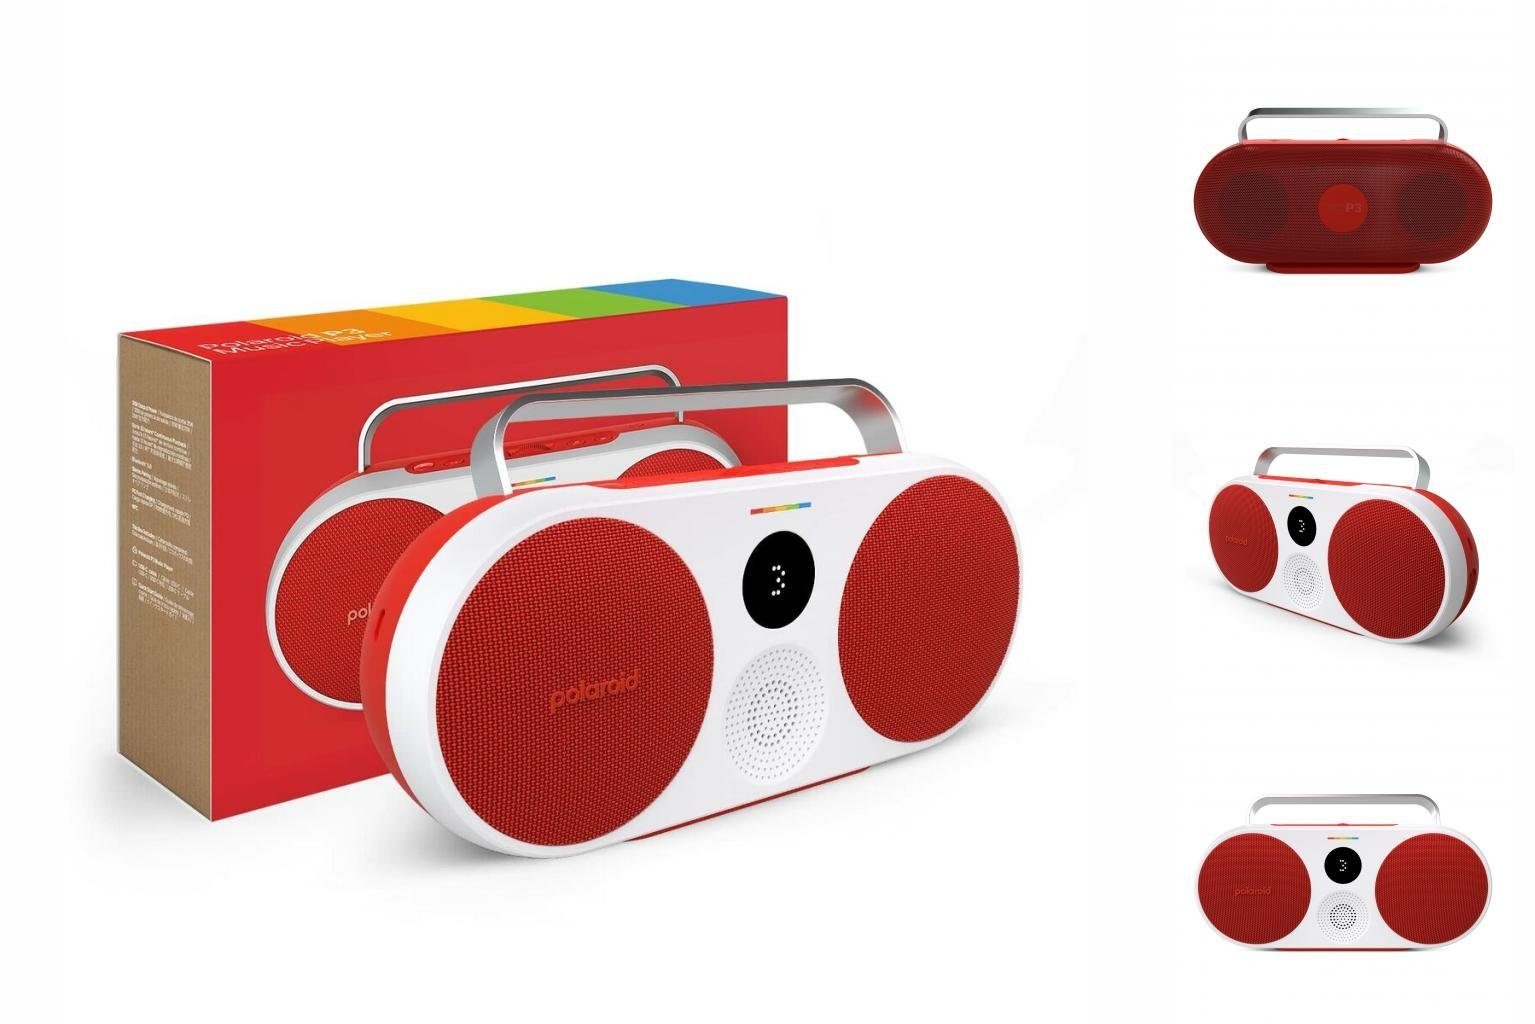 Polaroid P3 Bluetooth-Lautsprecher Tragbare Rot Polaroid Lautsprecher